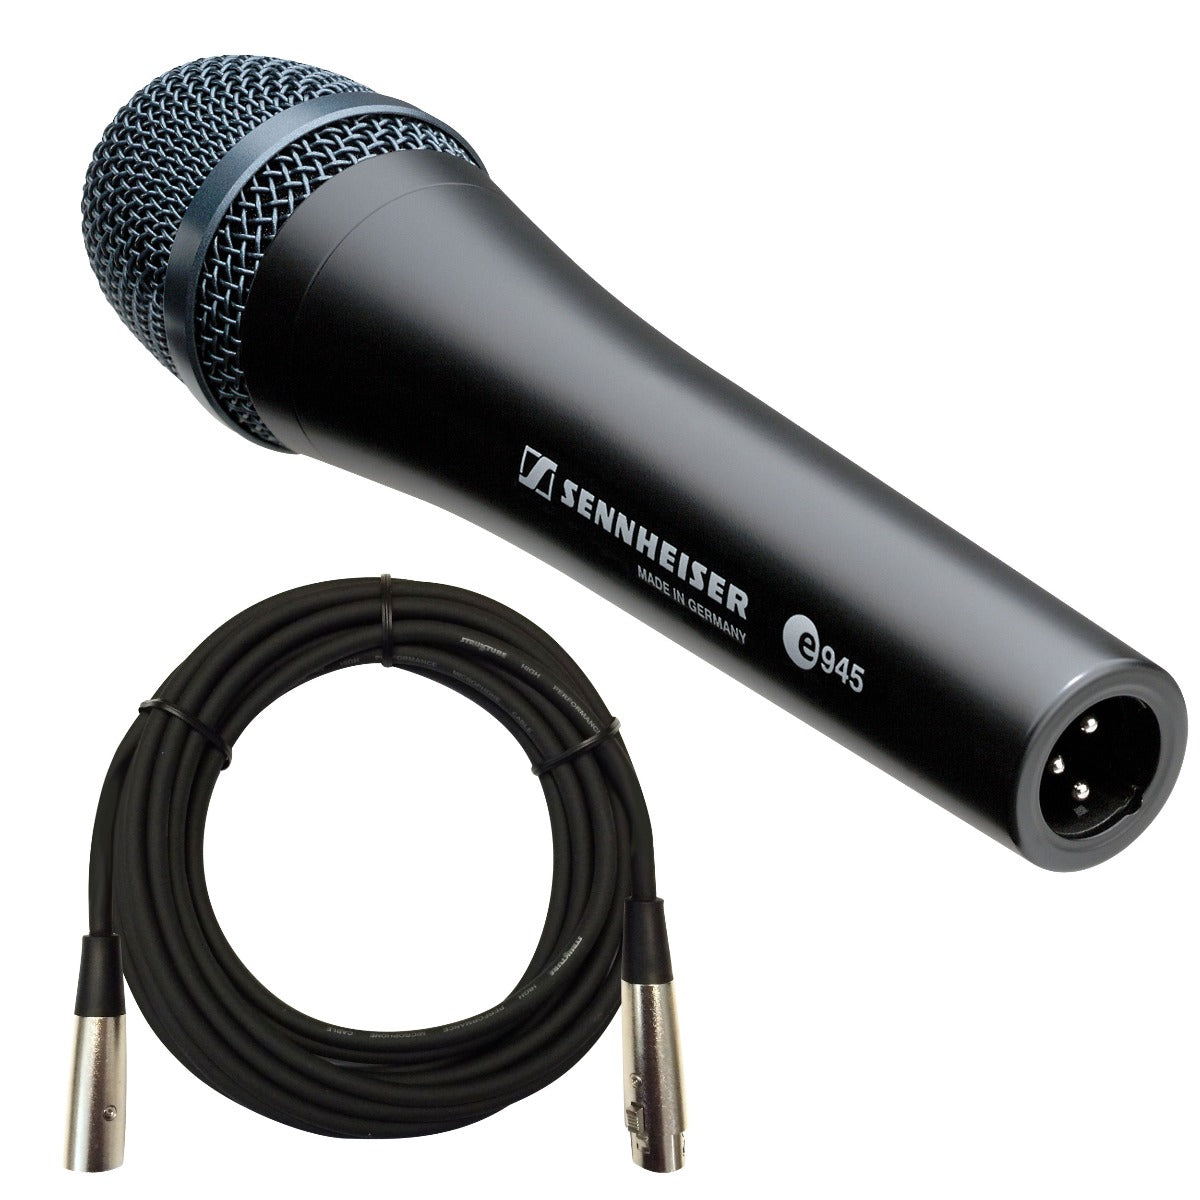 Sennheiser e 945 Dynamic Vocal Microphone CABLE KIT